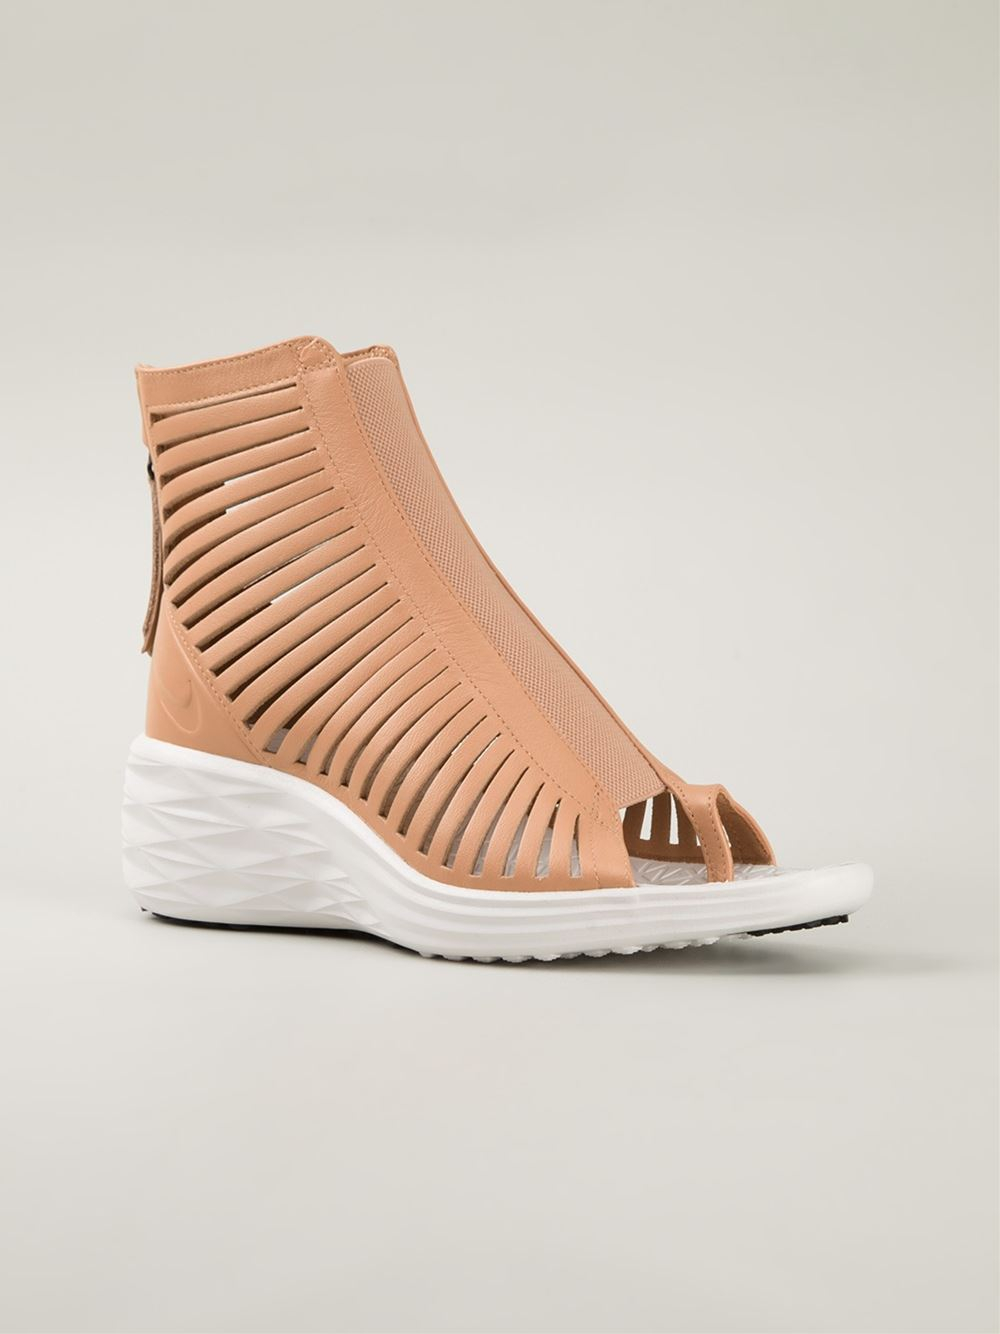 Nike Lunarsandiator Leather Wedge Sandals in Natural - Lyst